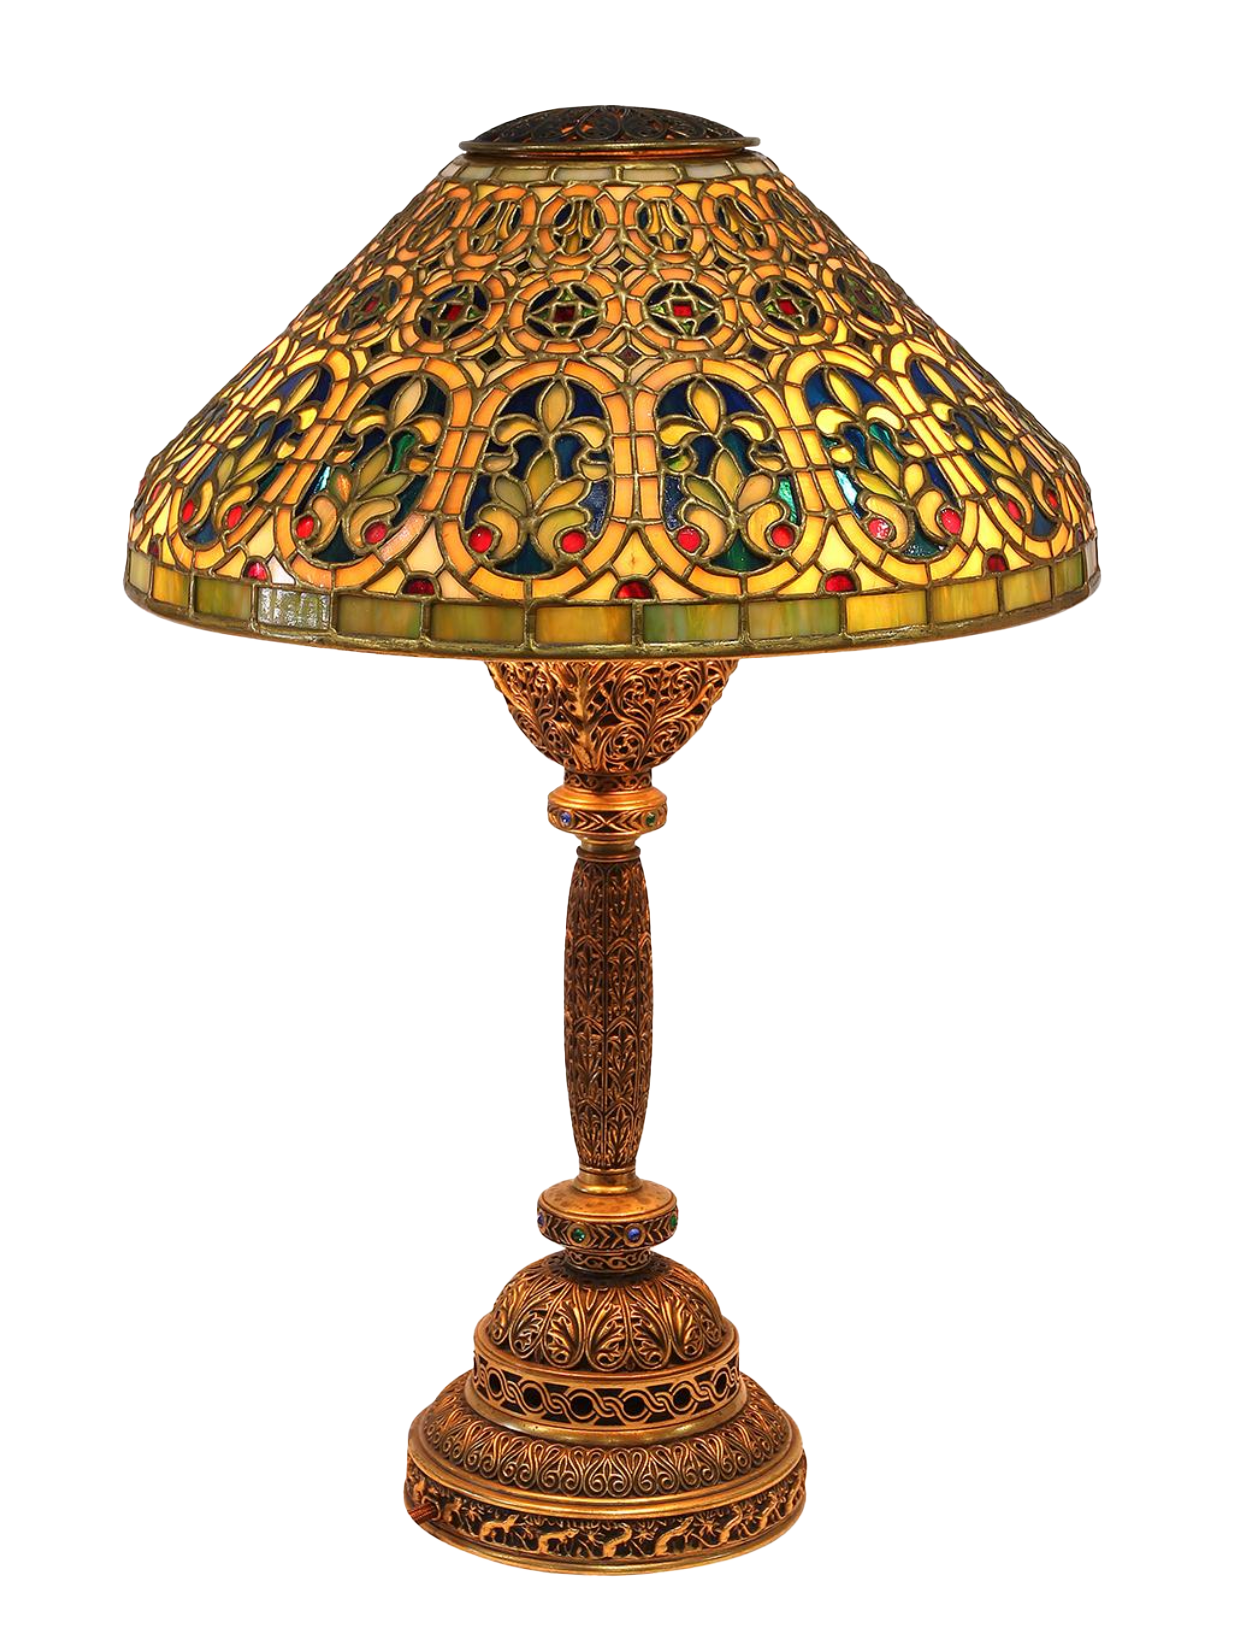 Tiffany Studios, New York, Venetian table lamp, circa 1910.Sold: $106,250